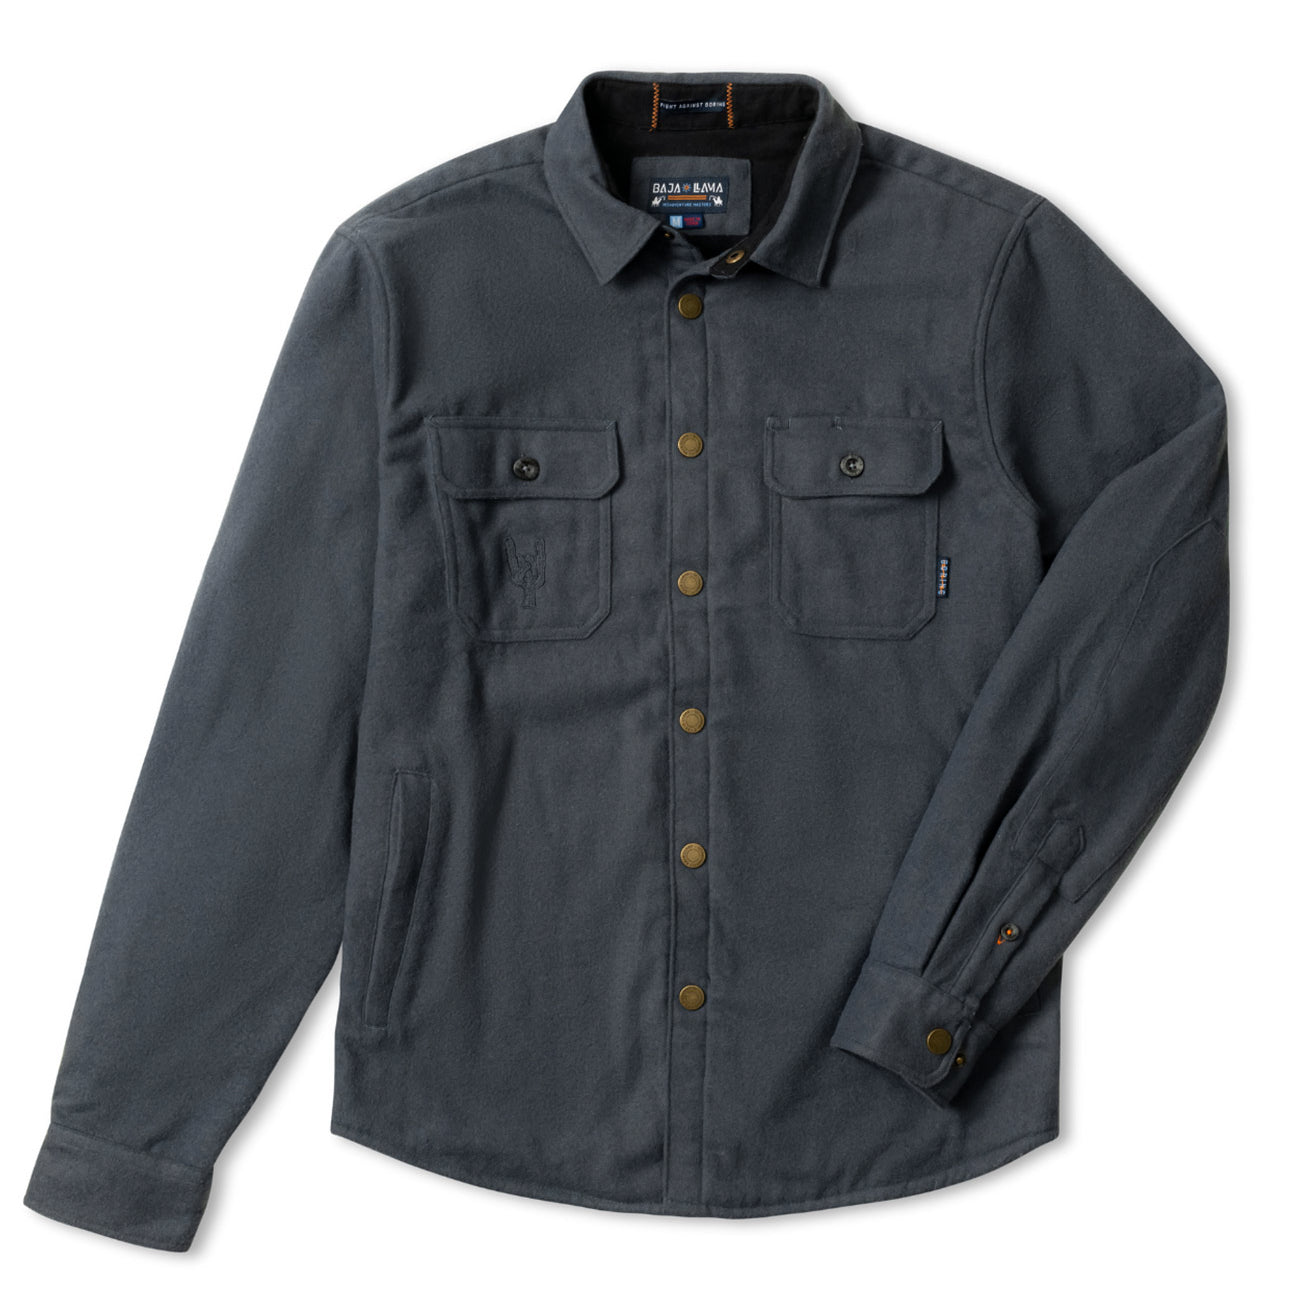 Baja Llama Black Wool Mid/Heavyweight RoadRunner Flannel Shirt Jacket